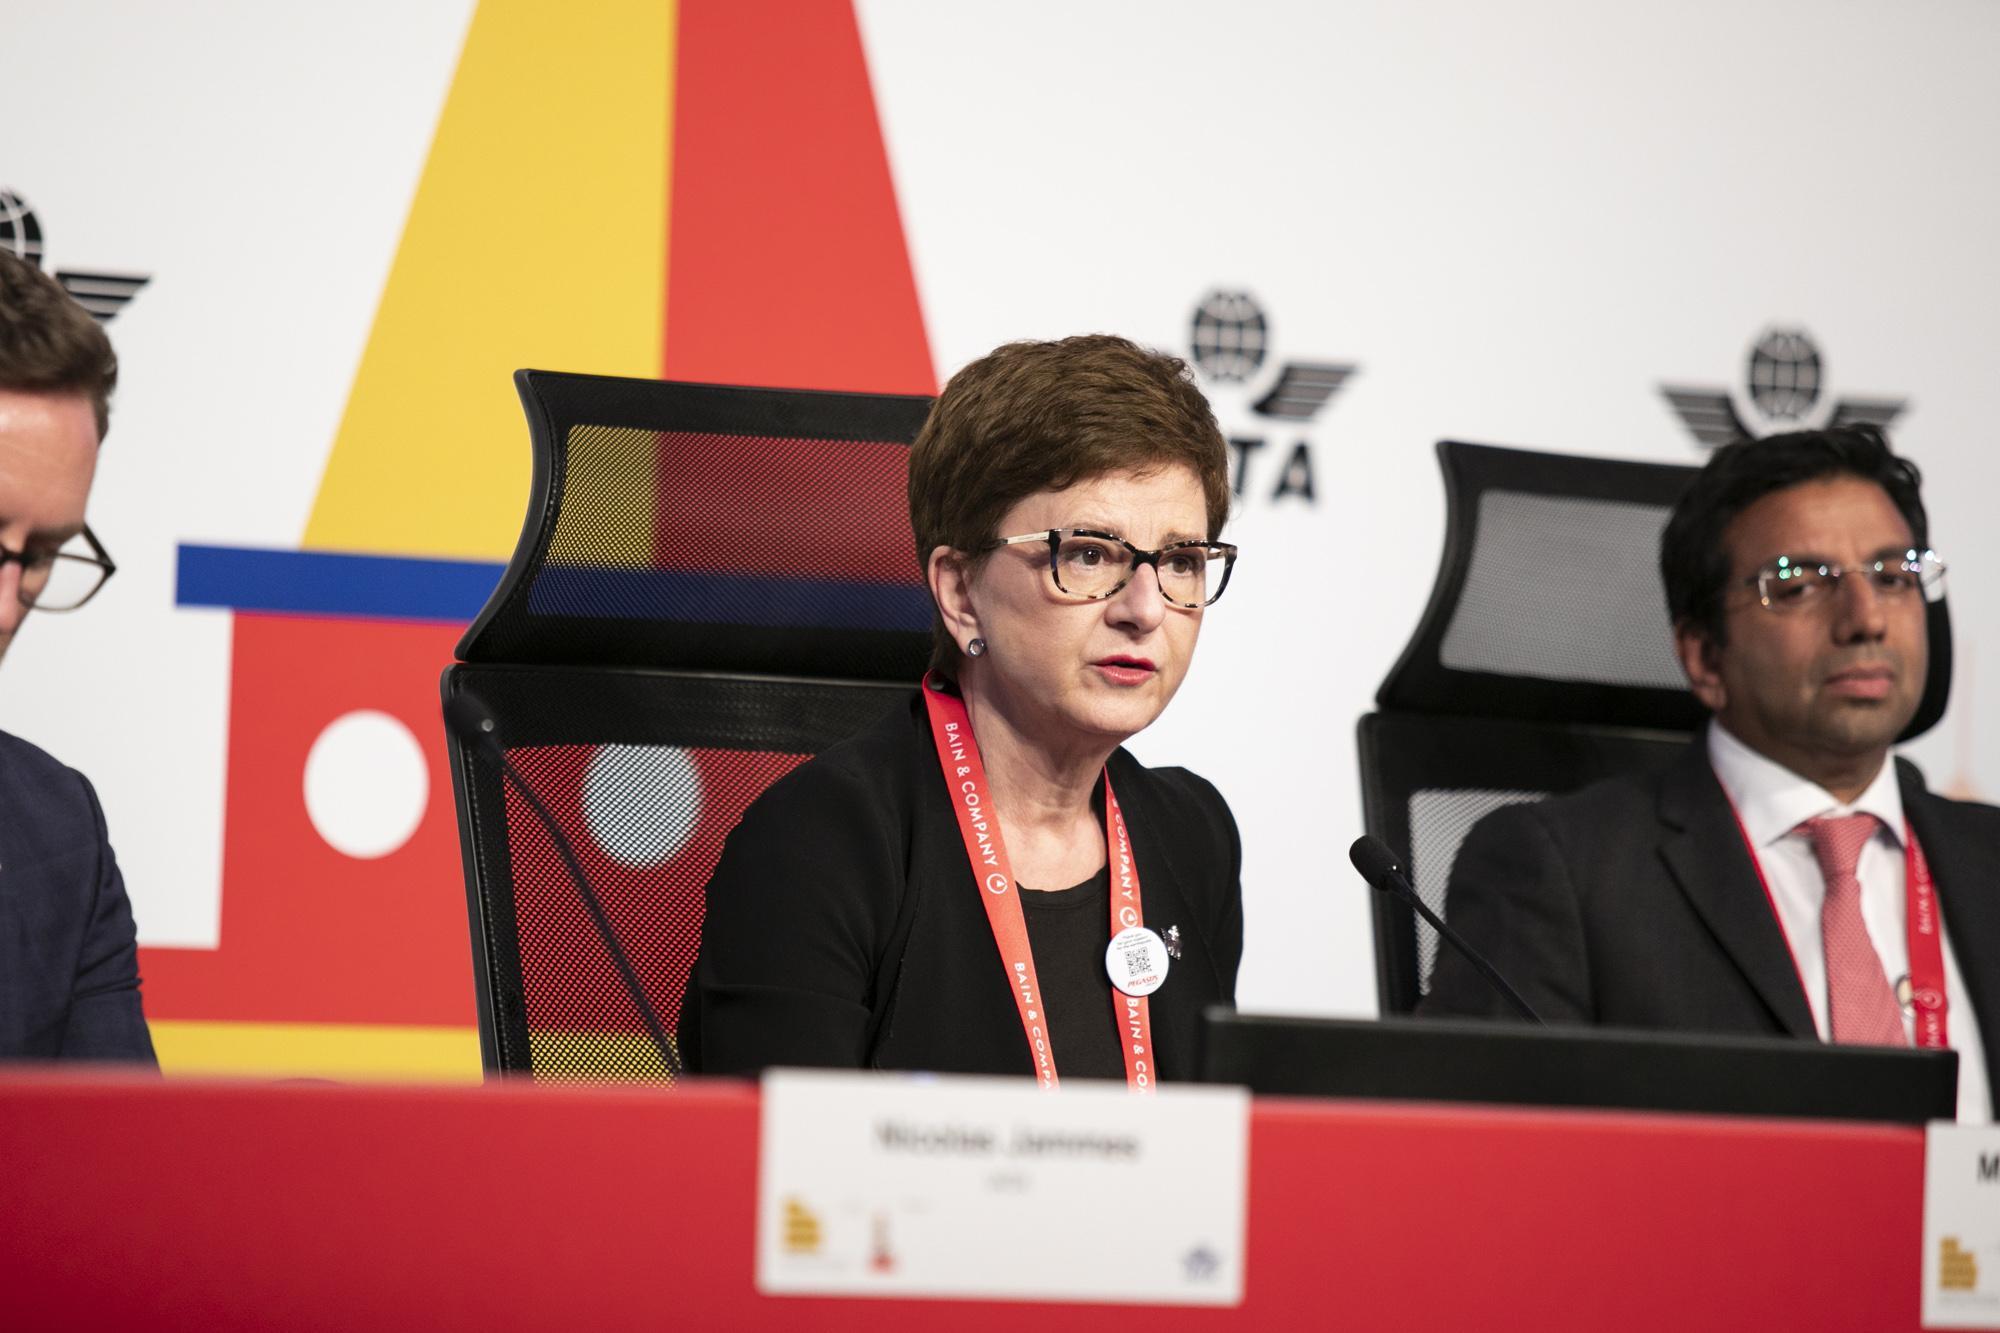 IATA chief economist Marie Owens Thomsen